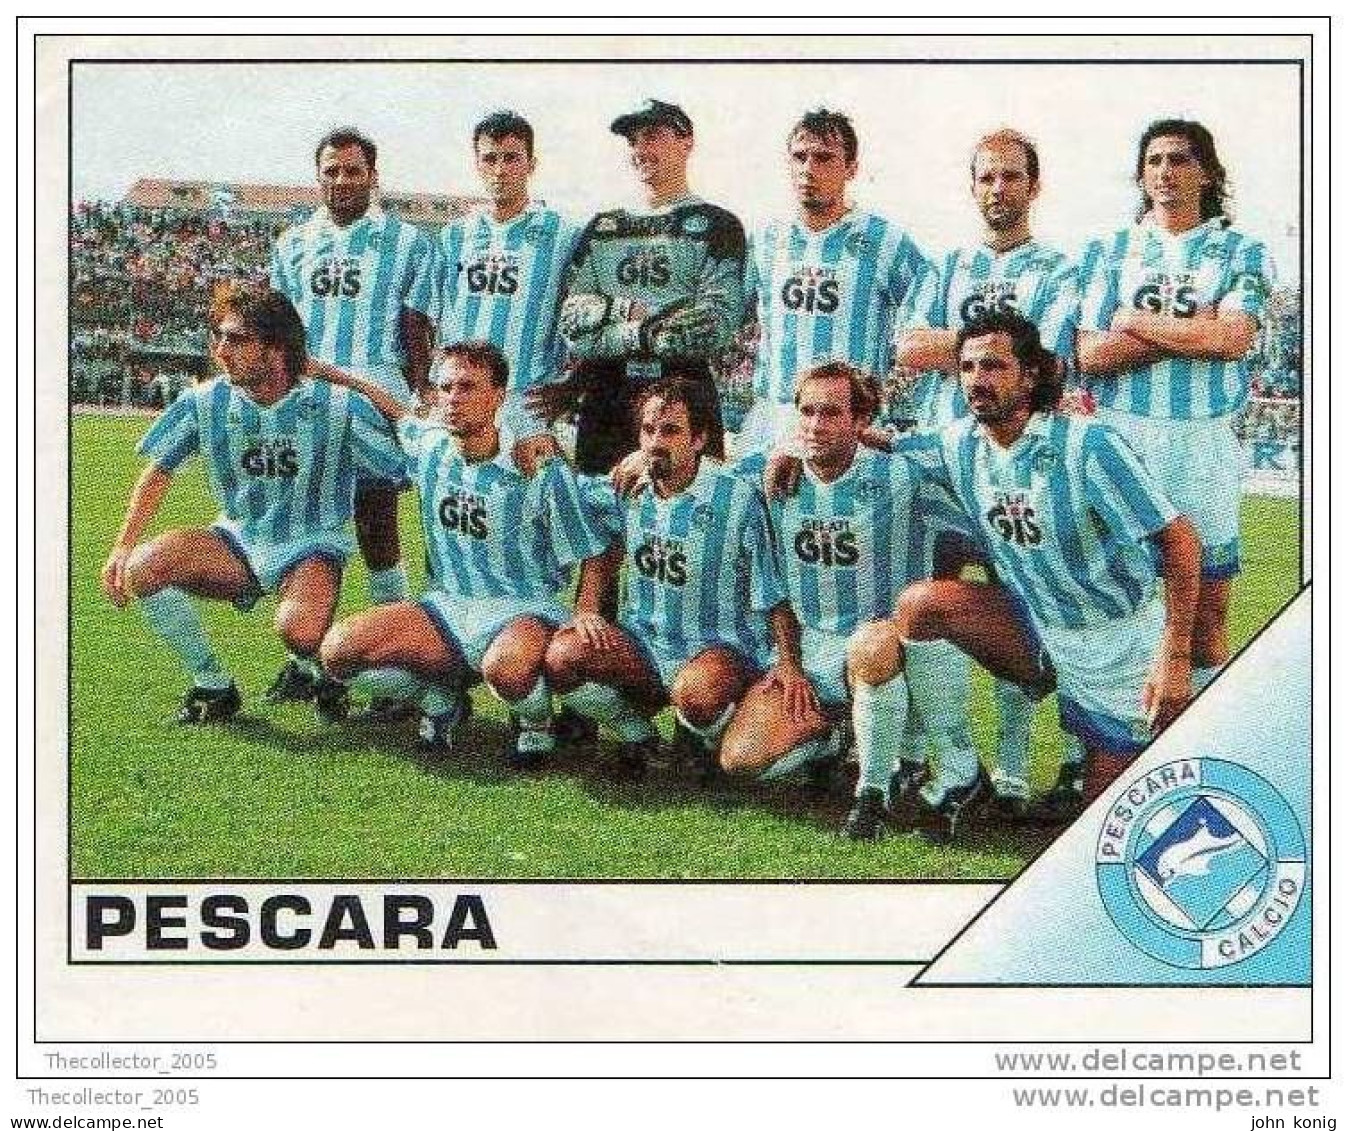 CALCIATORI - CALCIO Figurine Panini-calciatori 1995-96-n.460 (Pescara) - NUOVA-MAI INCOLLATA - Italiaanse Uitgave